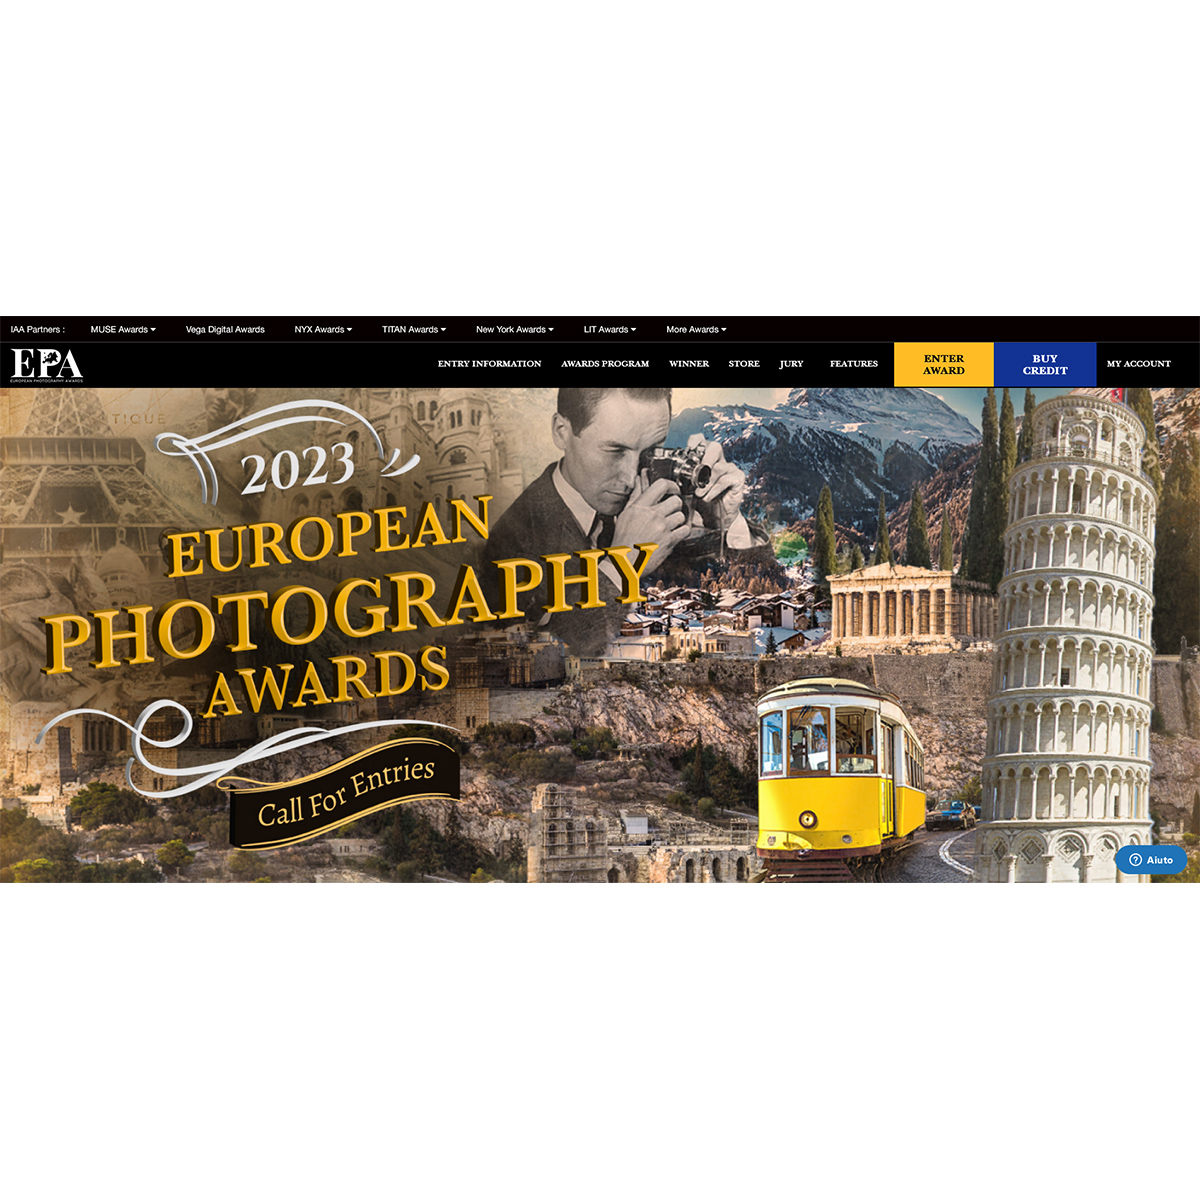 EPA - European Photography Awards